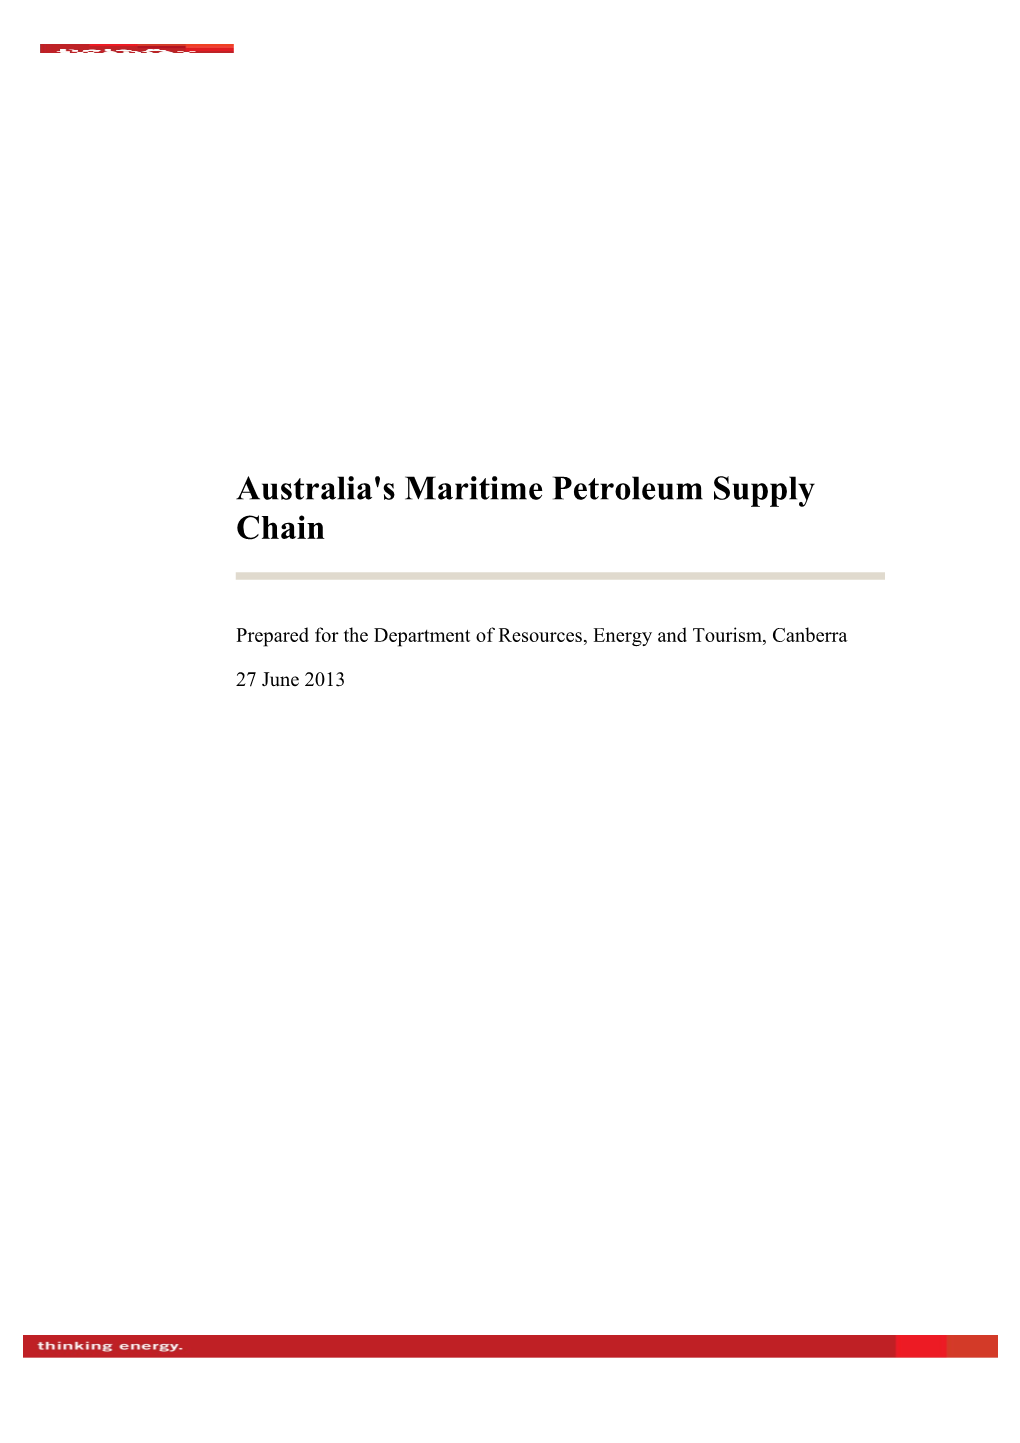 Australia's Maritime Petroleum Supply Chain, 2013 (DOCX 1184 KB)